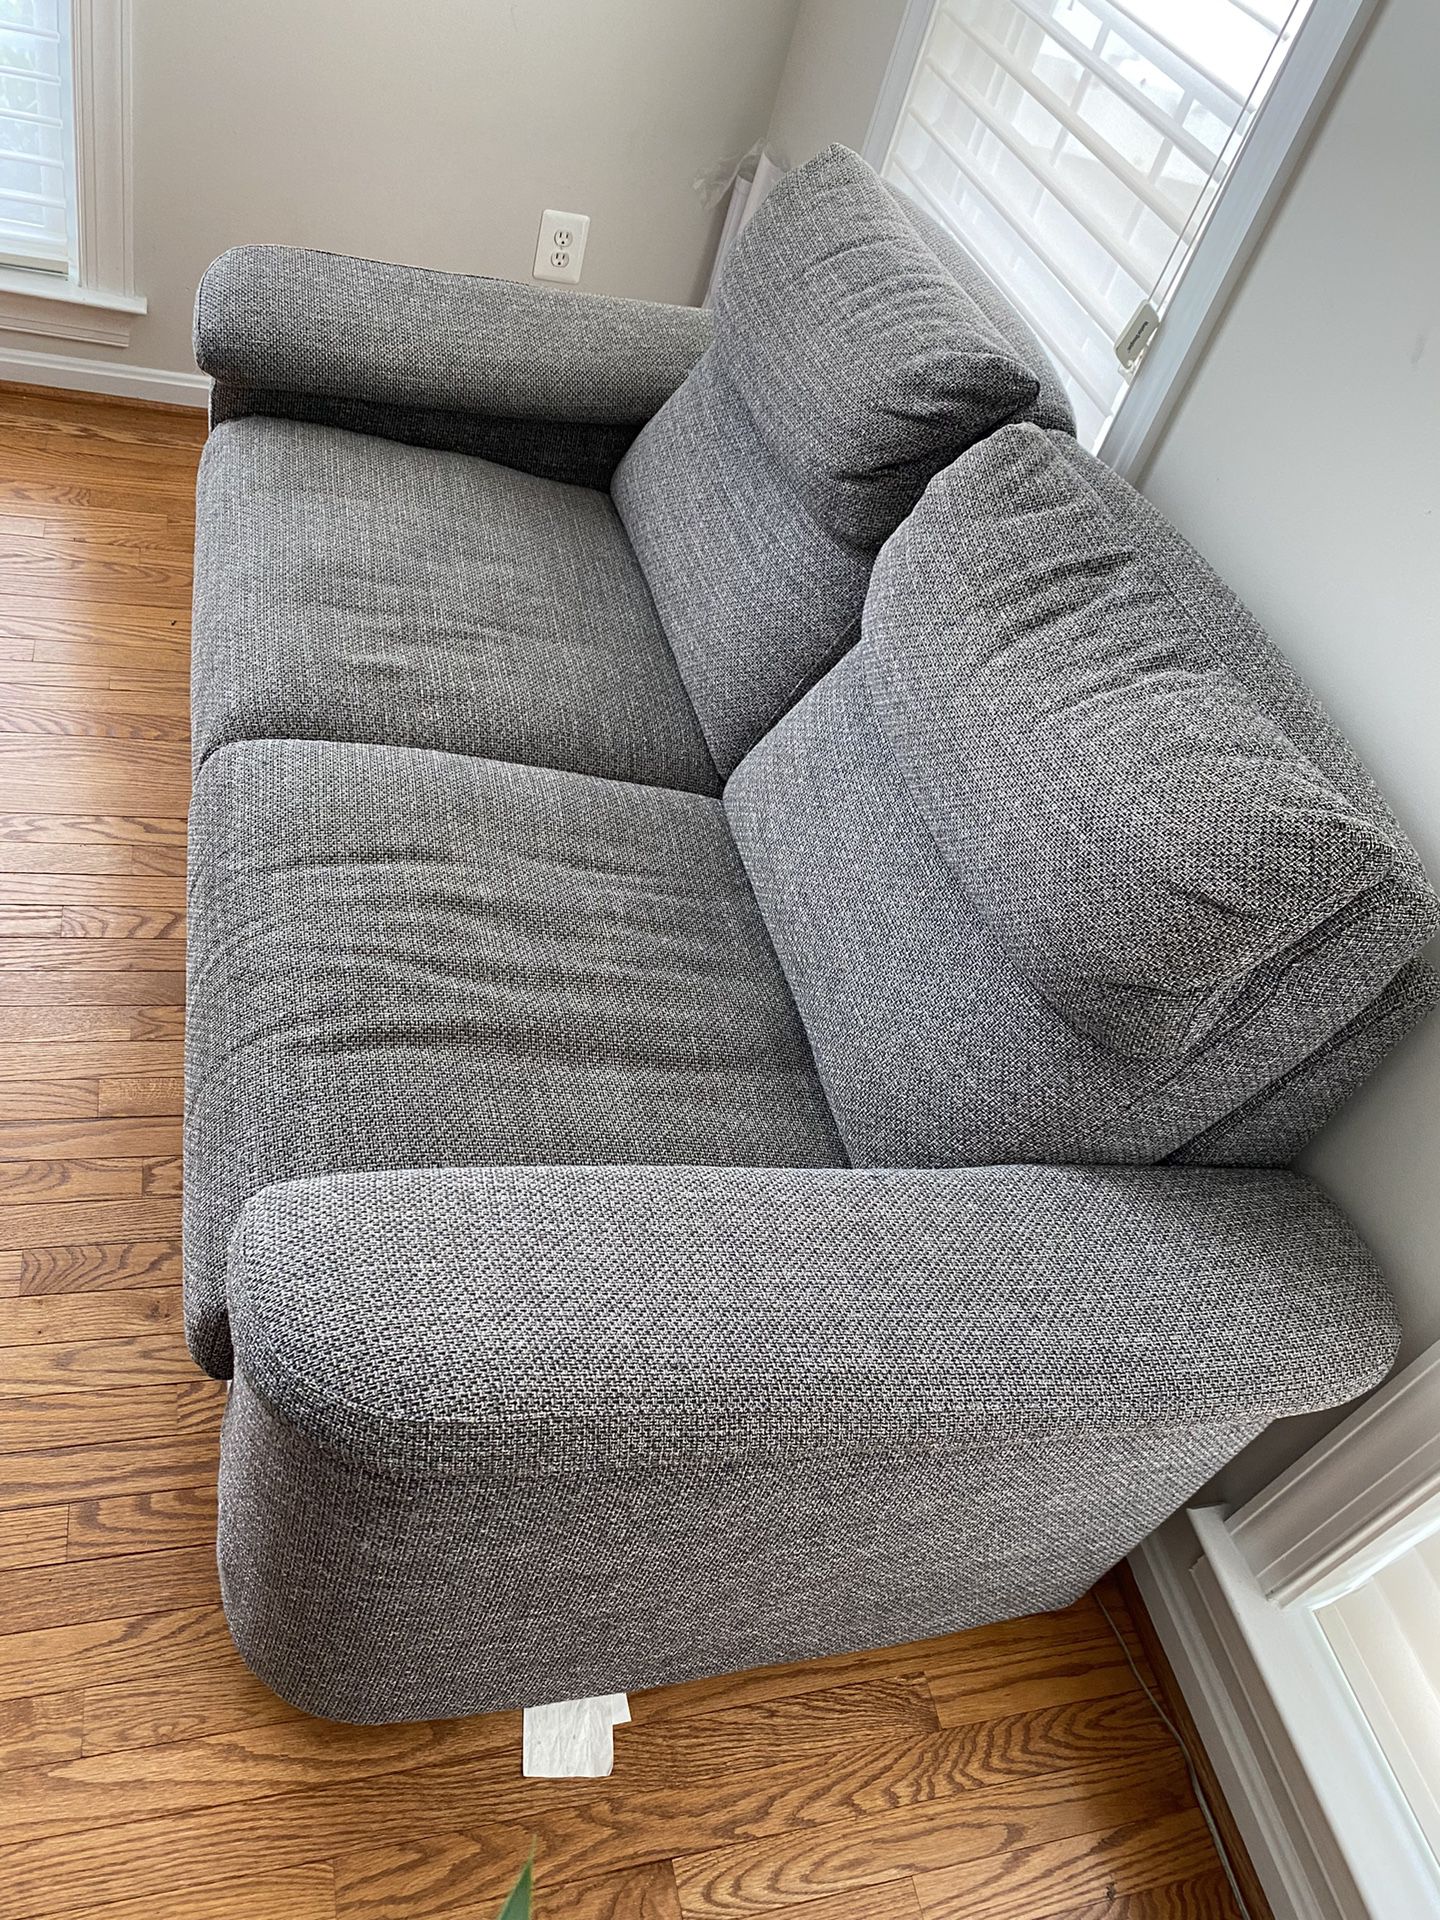 Ikea Sofa For Living Room! 